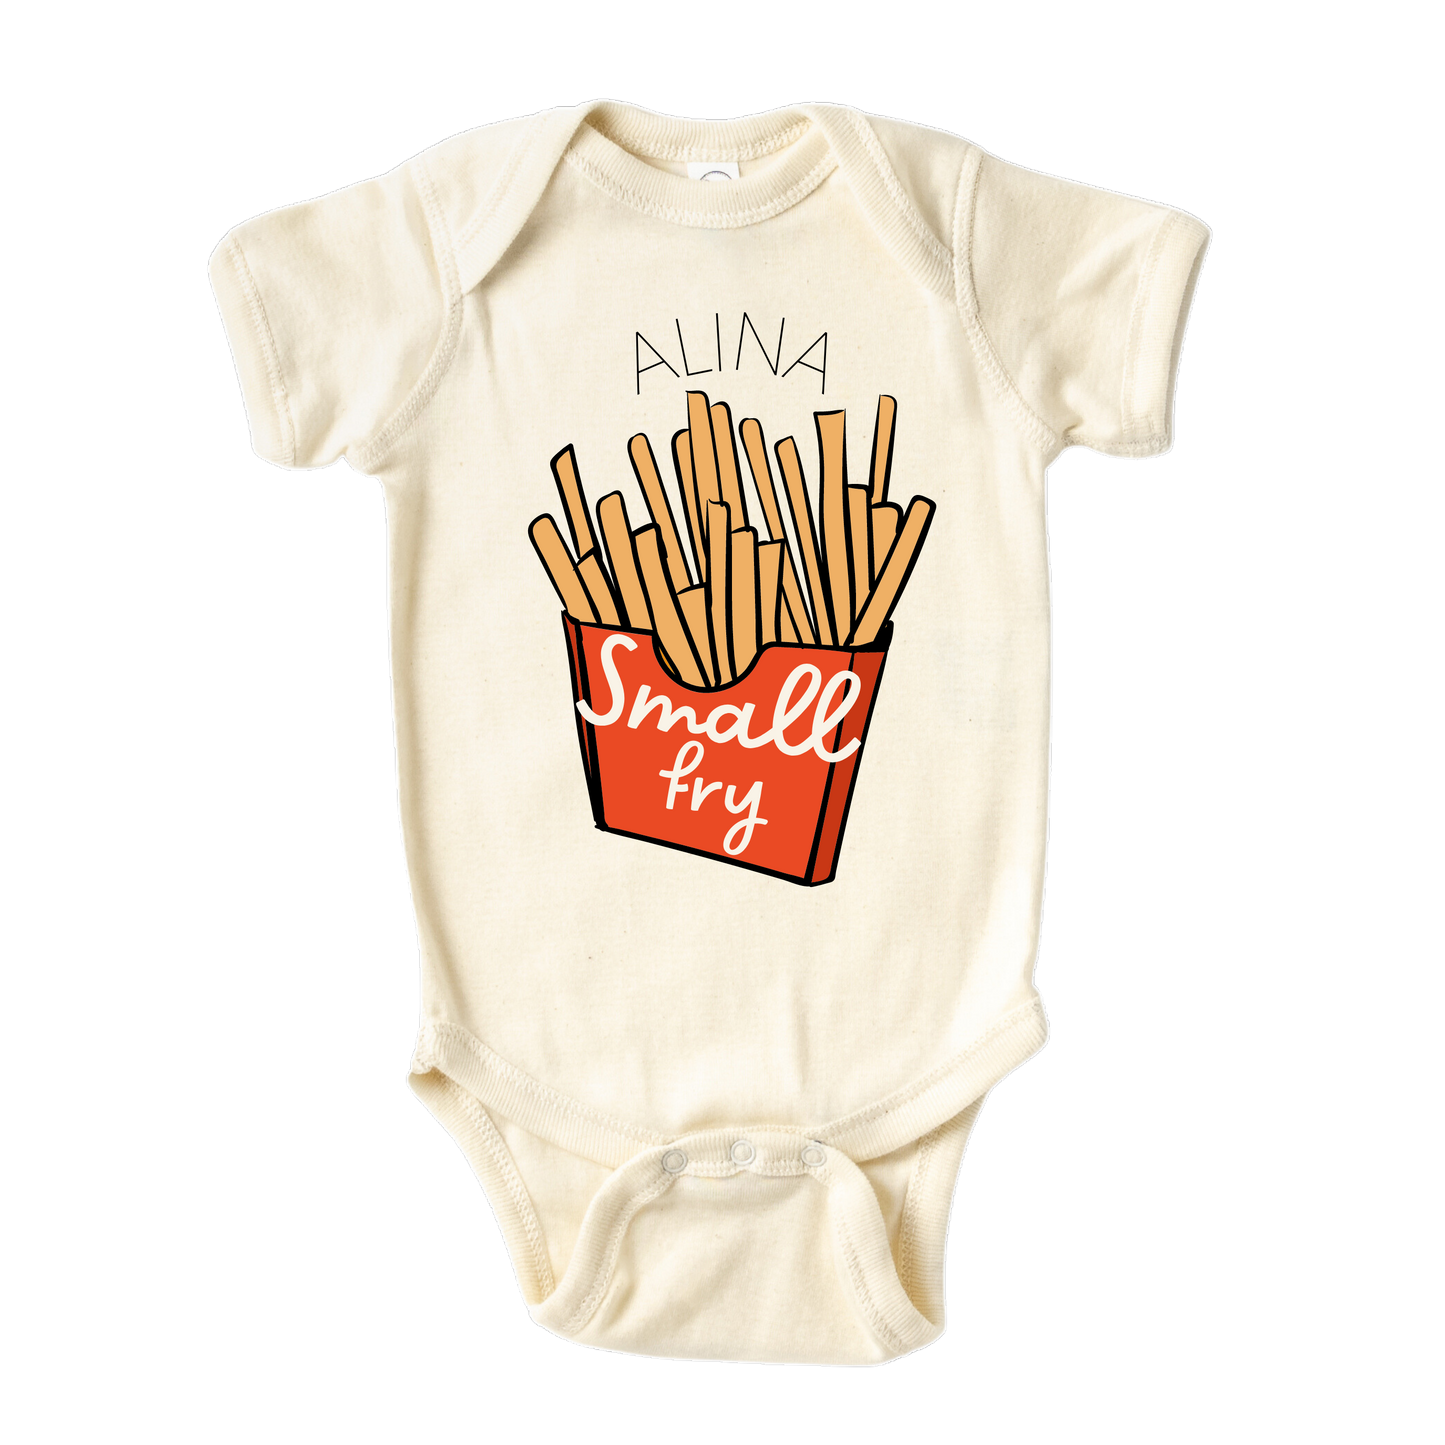 Cute French Fries Kid Tshirt - Small Fry Baby Onsie - Funny Baby Onesie - Newborn Gift - Custom Name